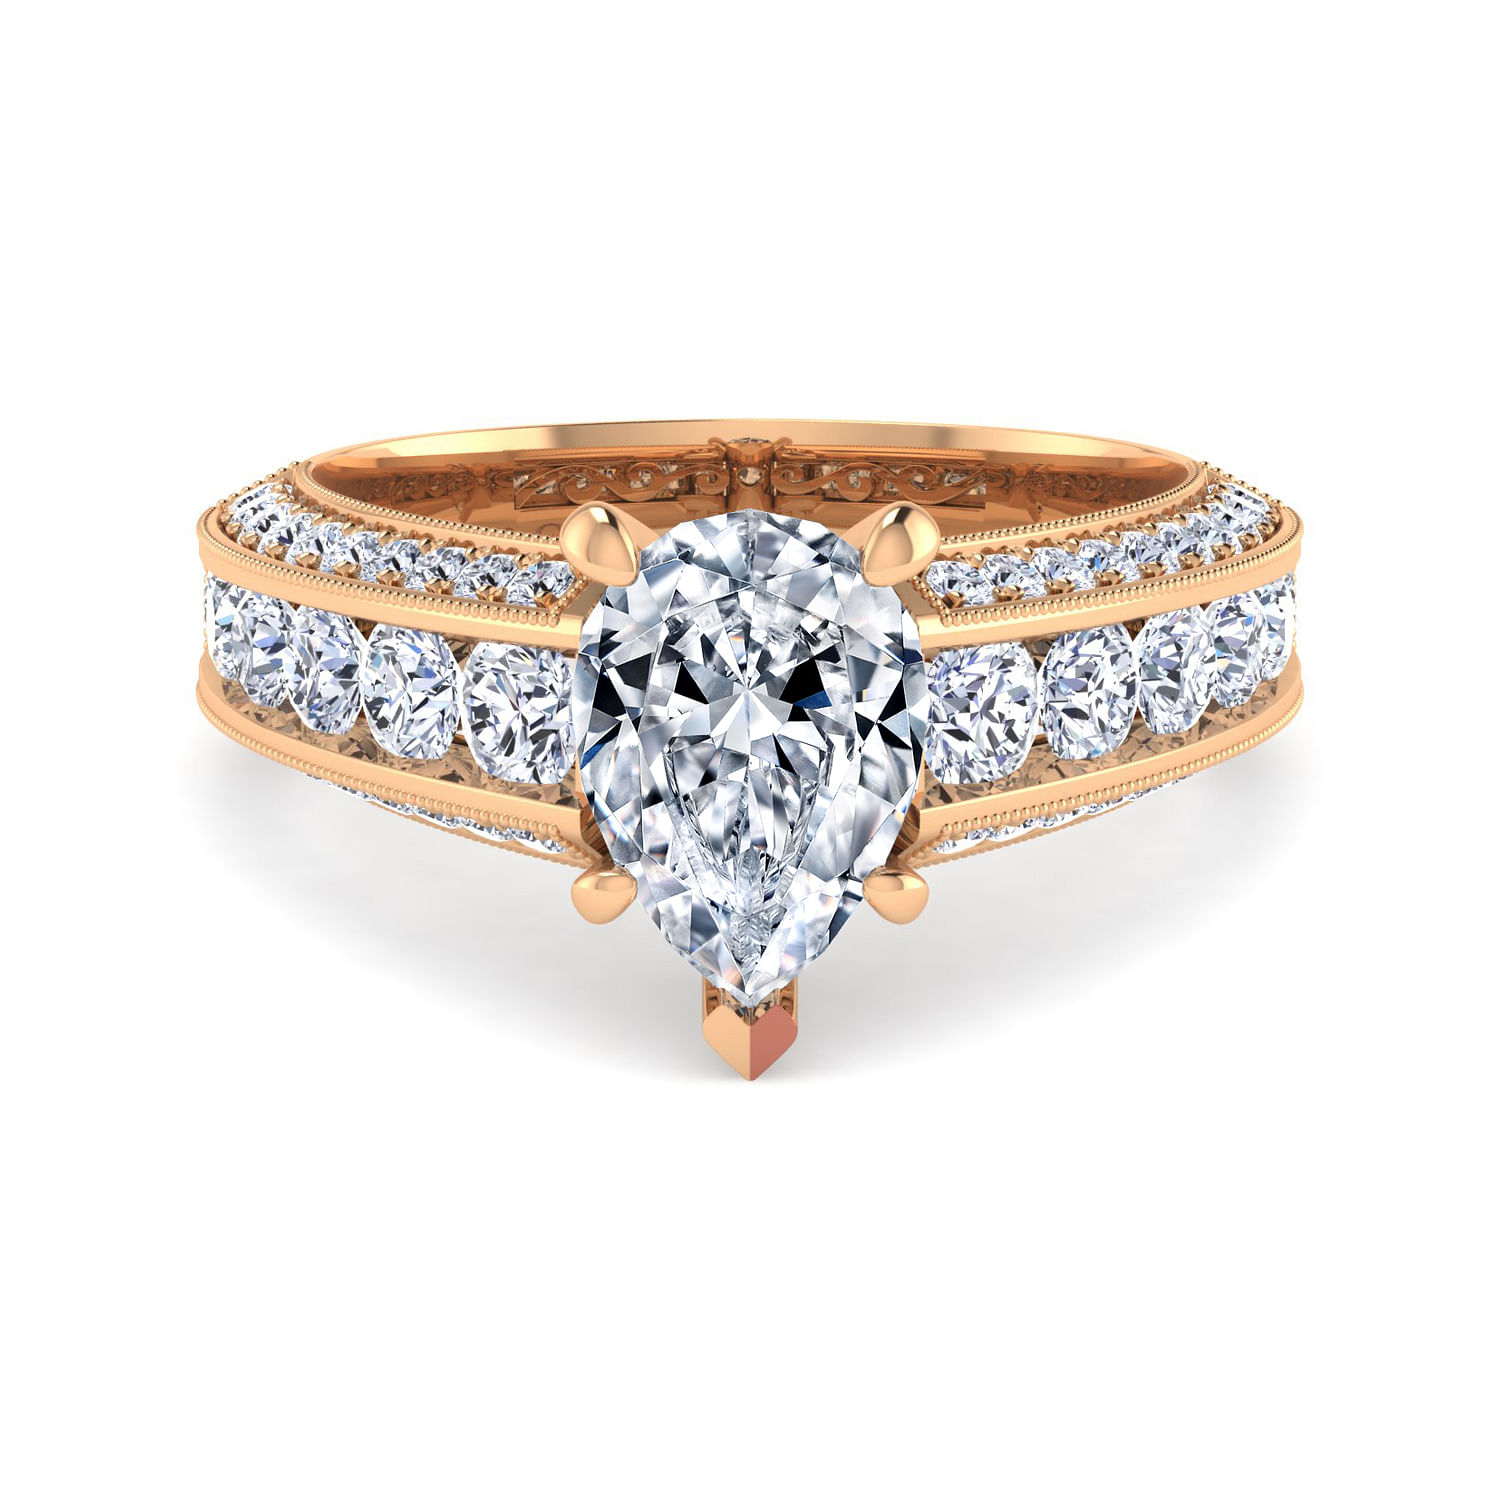 Rebecca - Vintage Inspired 14K Rose Gold Wide Band Pear Shape Diamond Engagement Ring